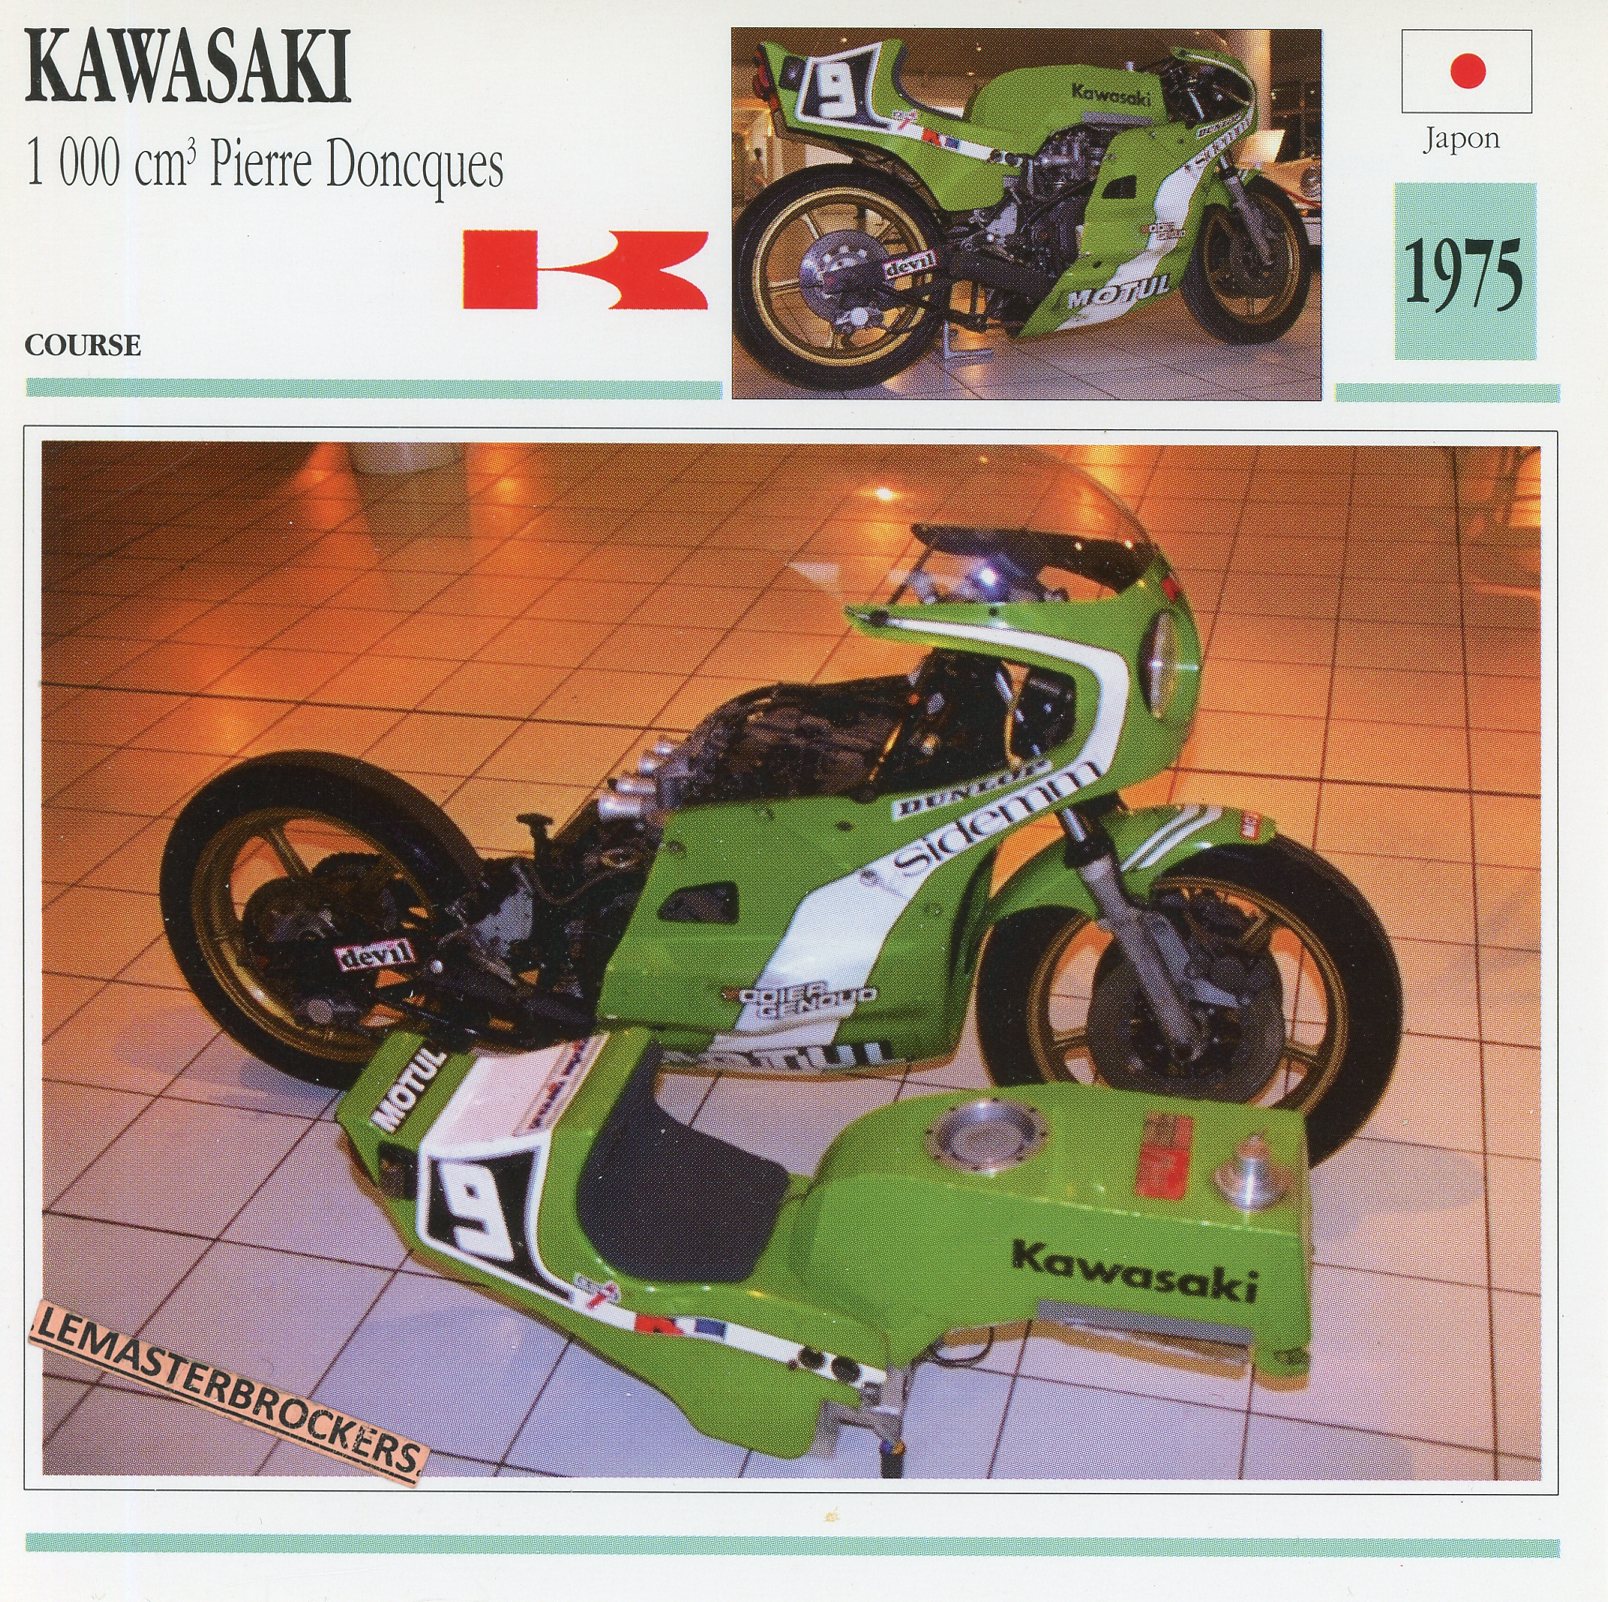 KAWASAKI-1000-PIERRE-DONCQUES-1975-FICHE-MOTO-KAWASAKI-LEMASTERBROCKERS